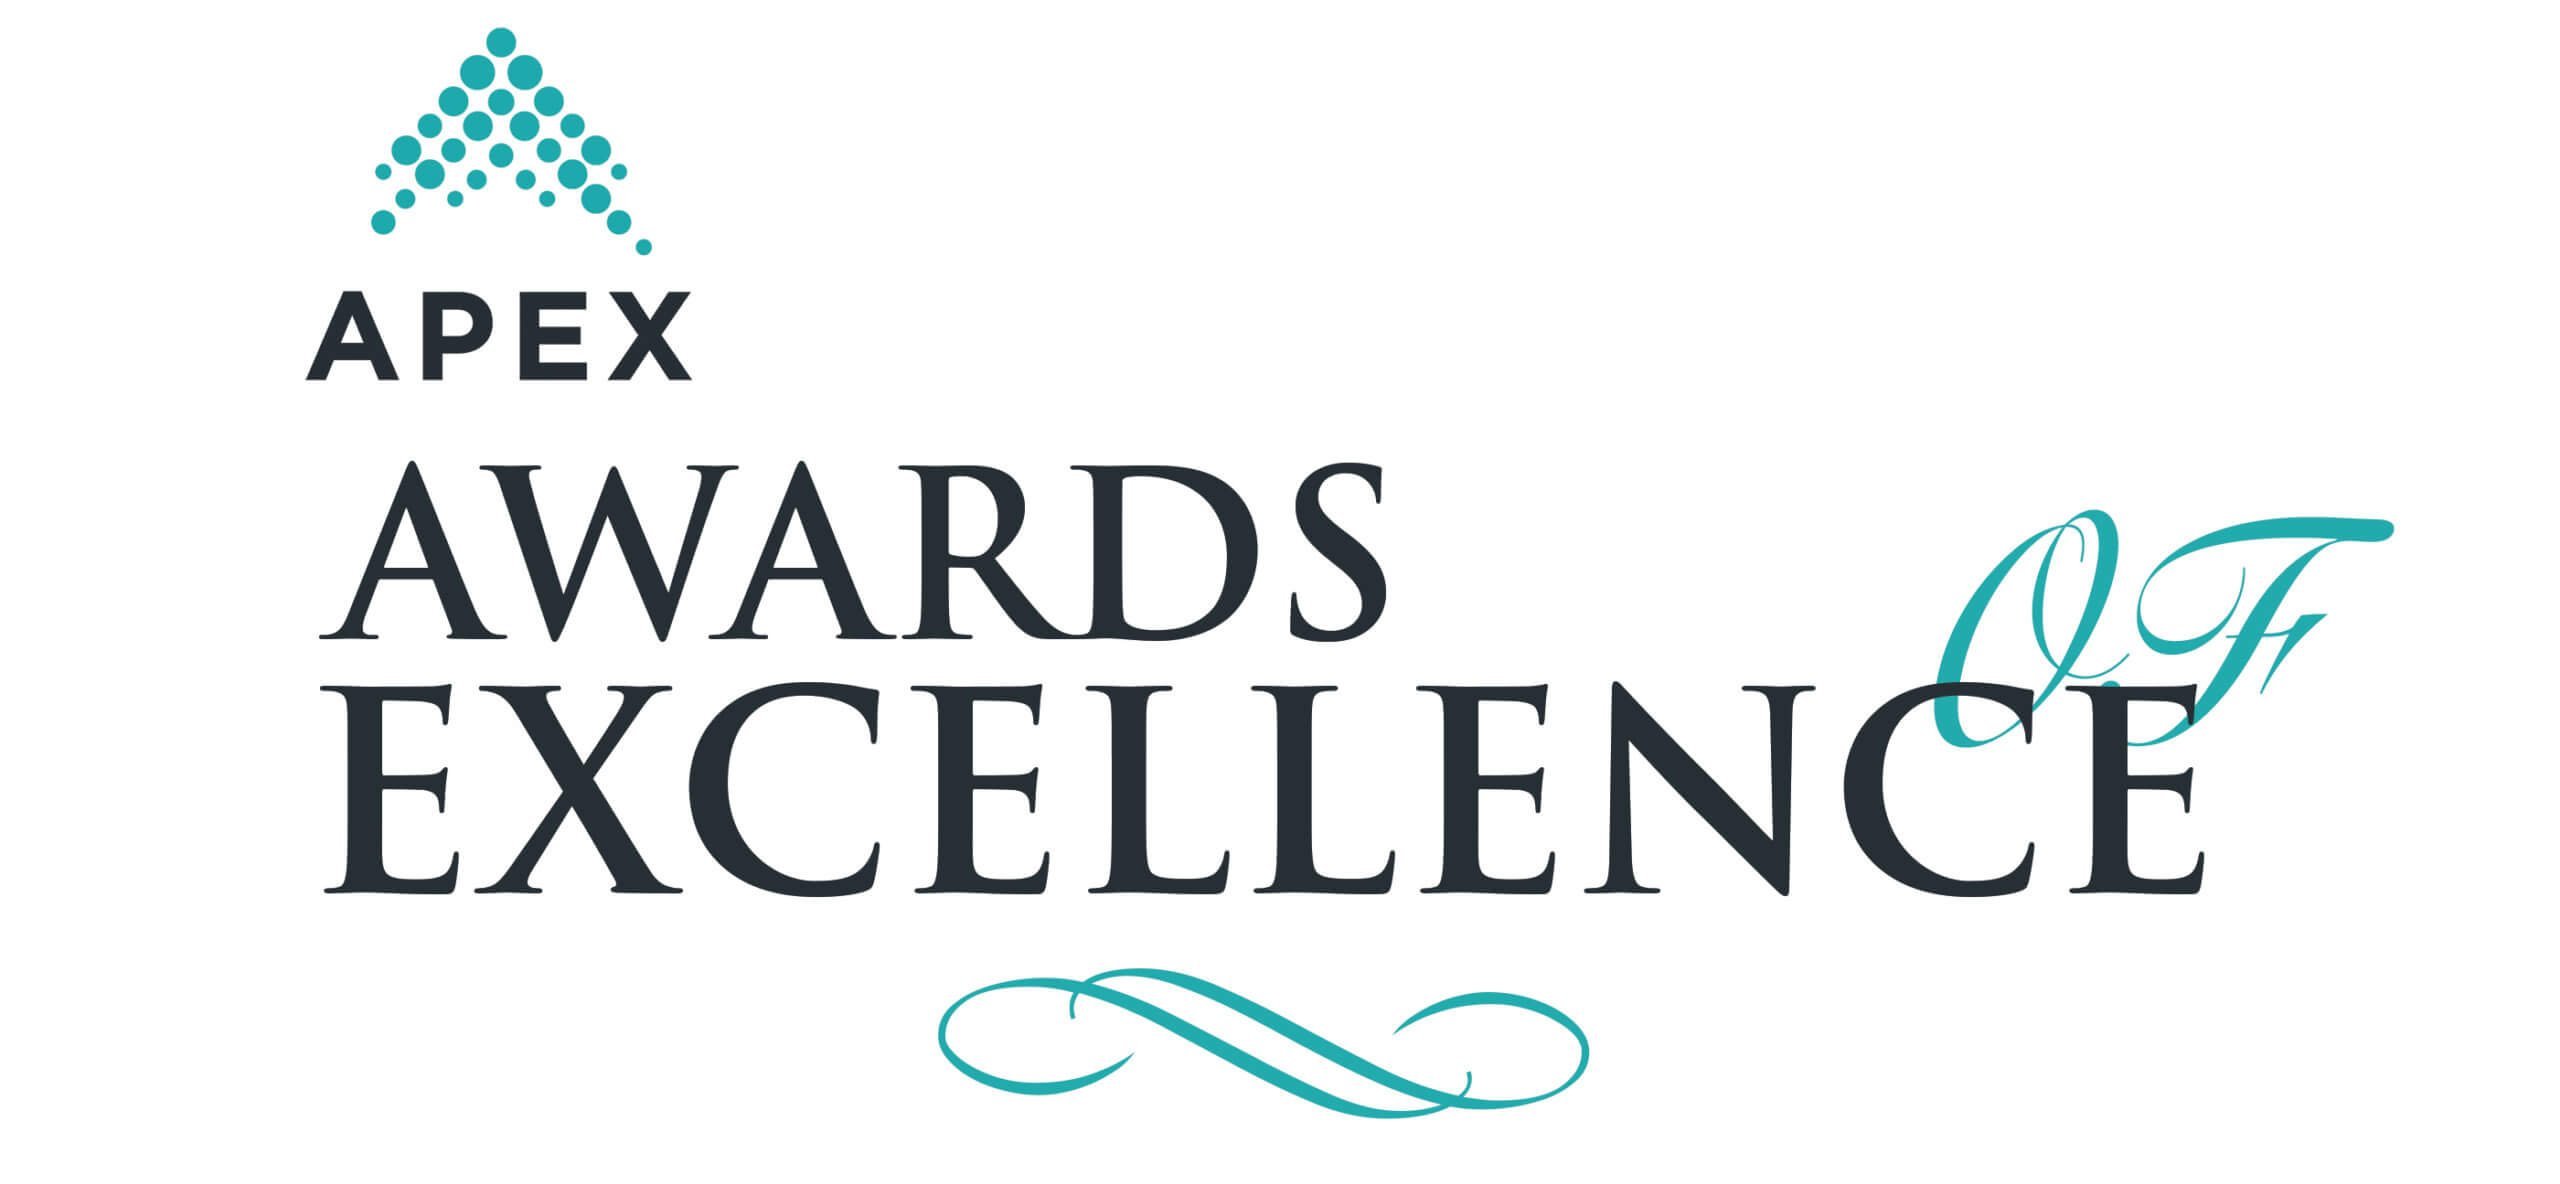 Awards of excellence logo